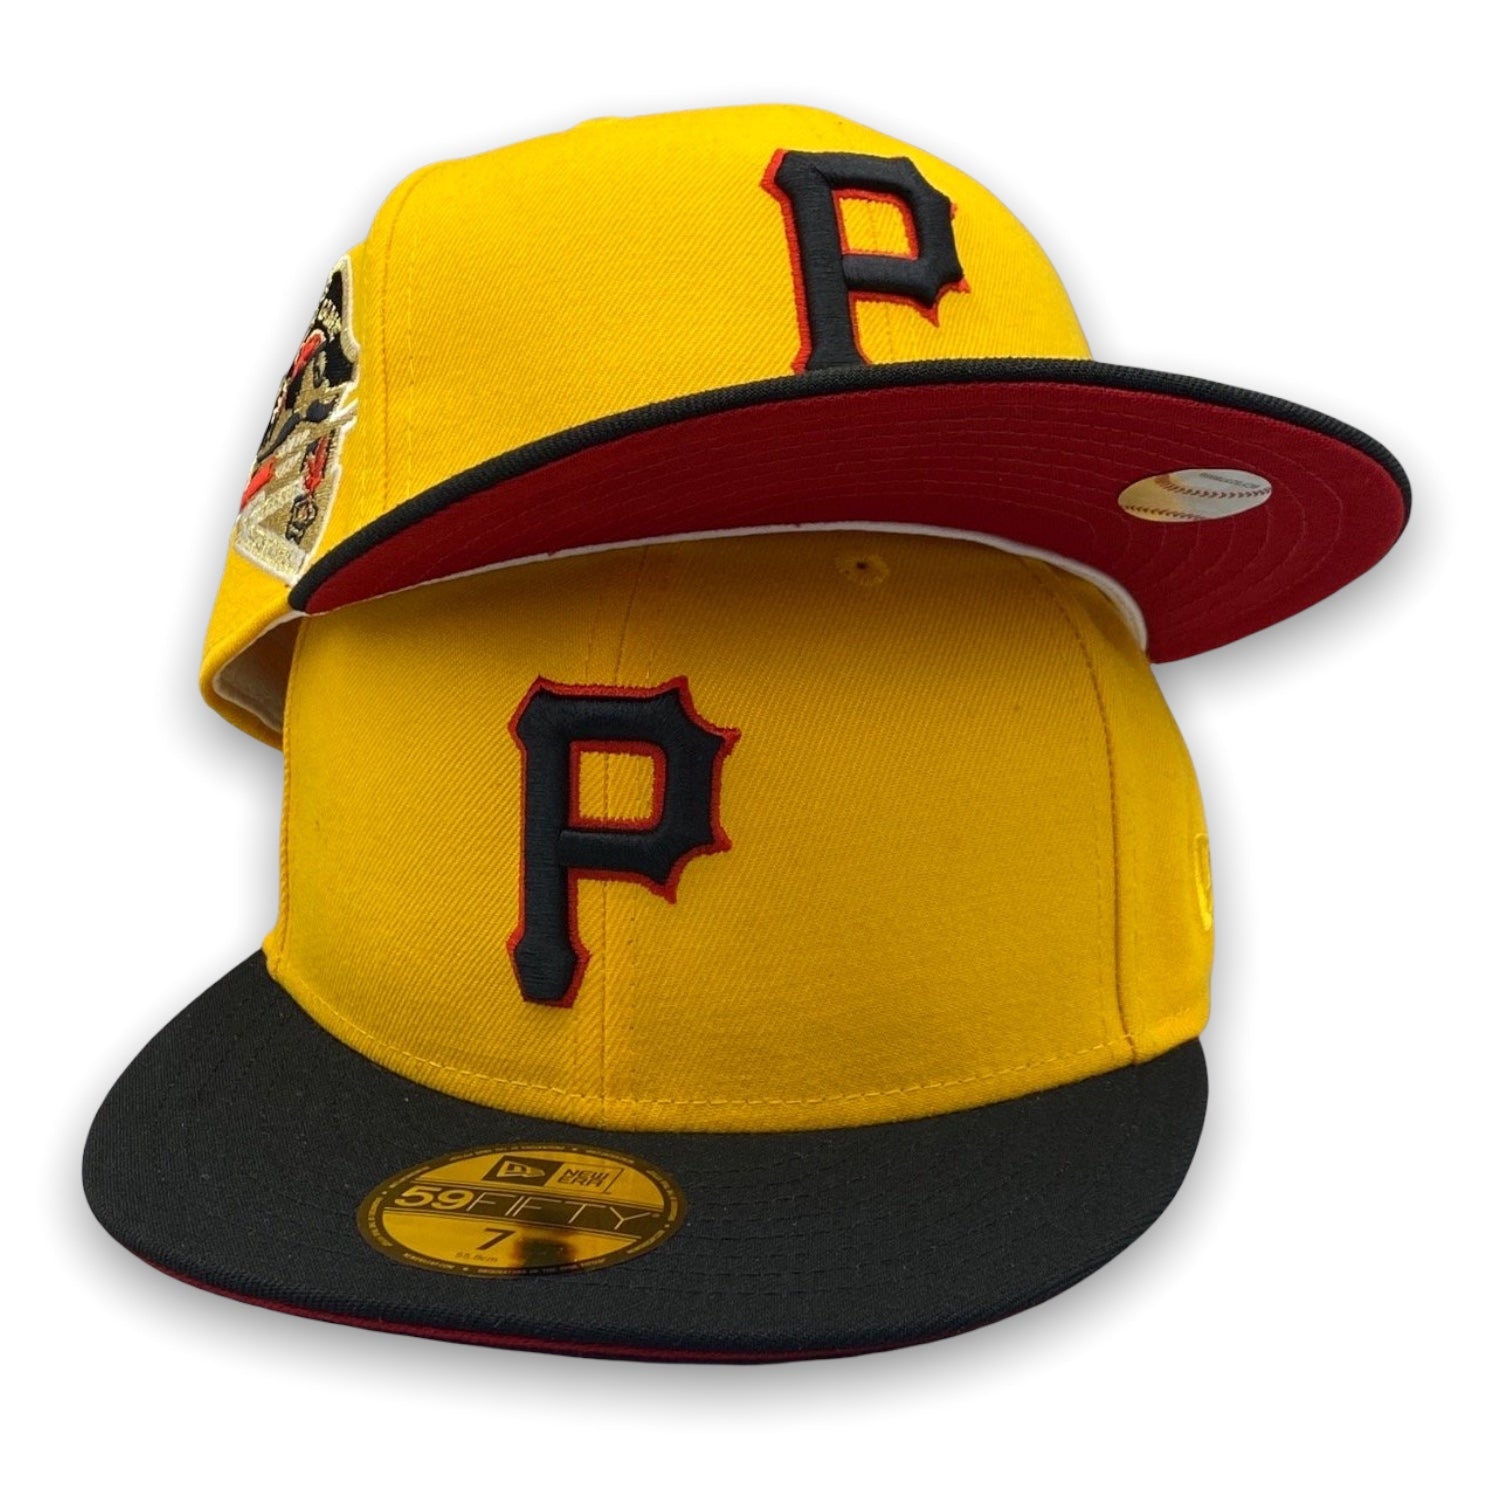 Portland Pirates Snapback Hat Black Gold Yellow Maine